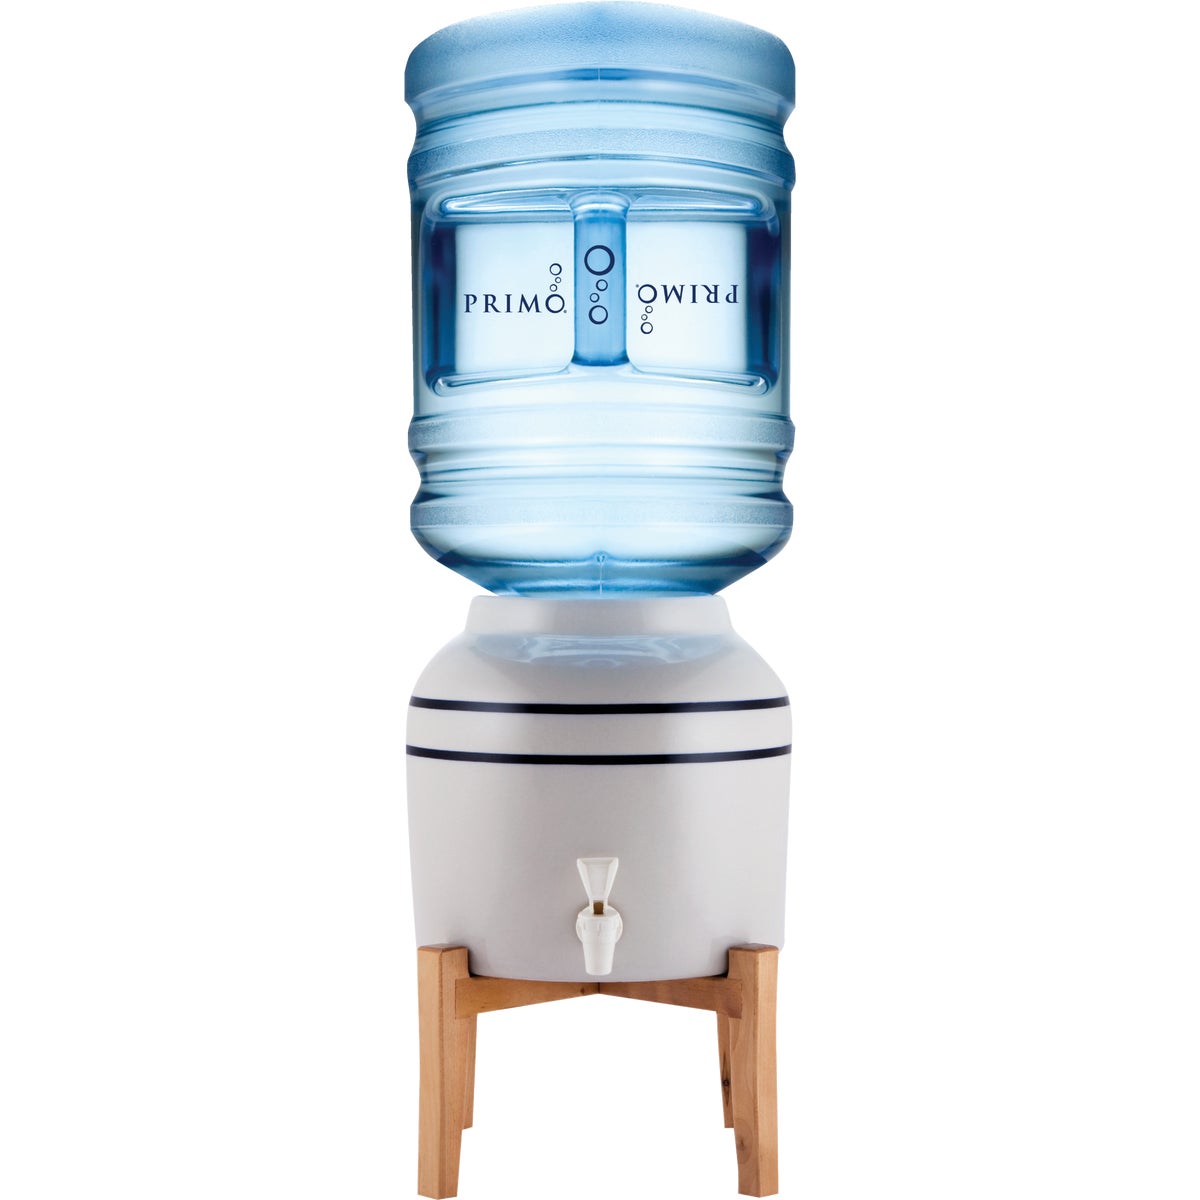 Primo Water Ceramic Bottled Water Cooler Dispenser